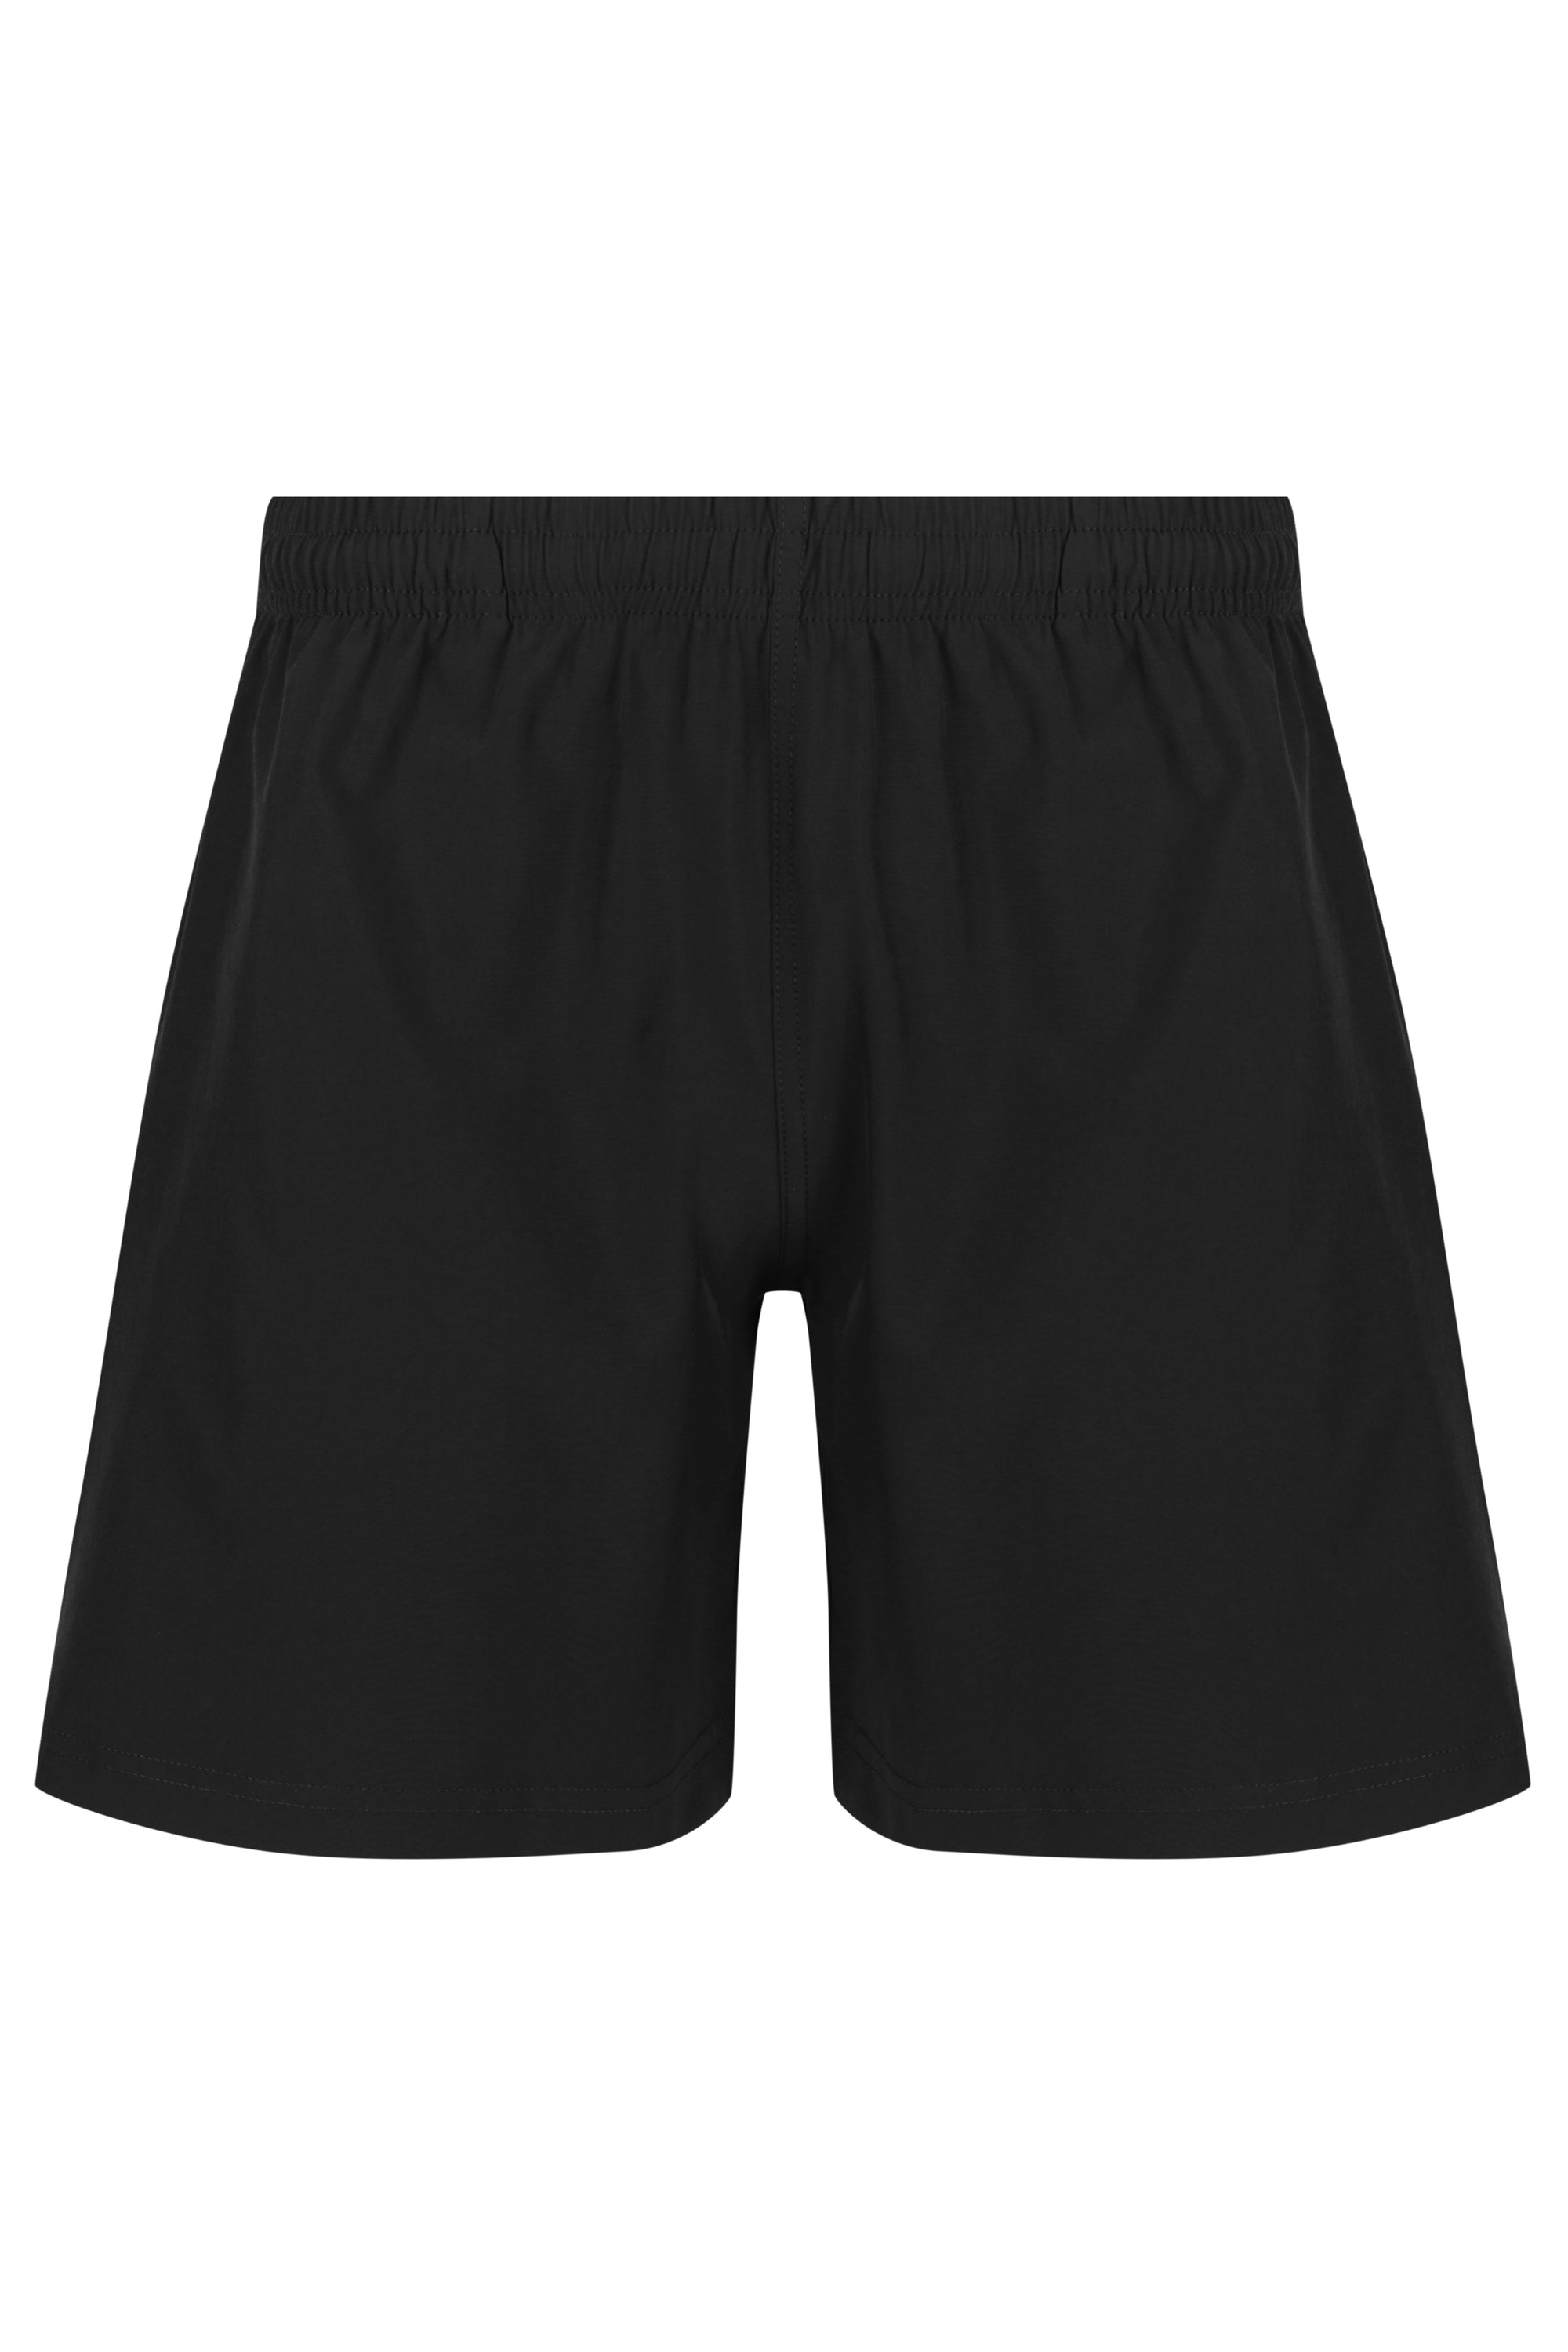 Mens Work School Shorts - Black